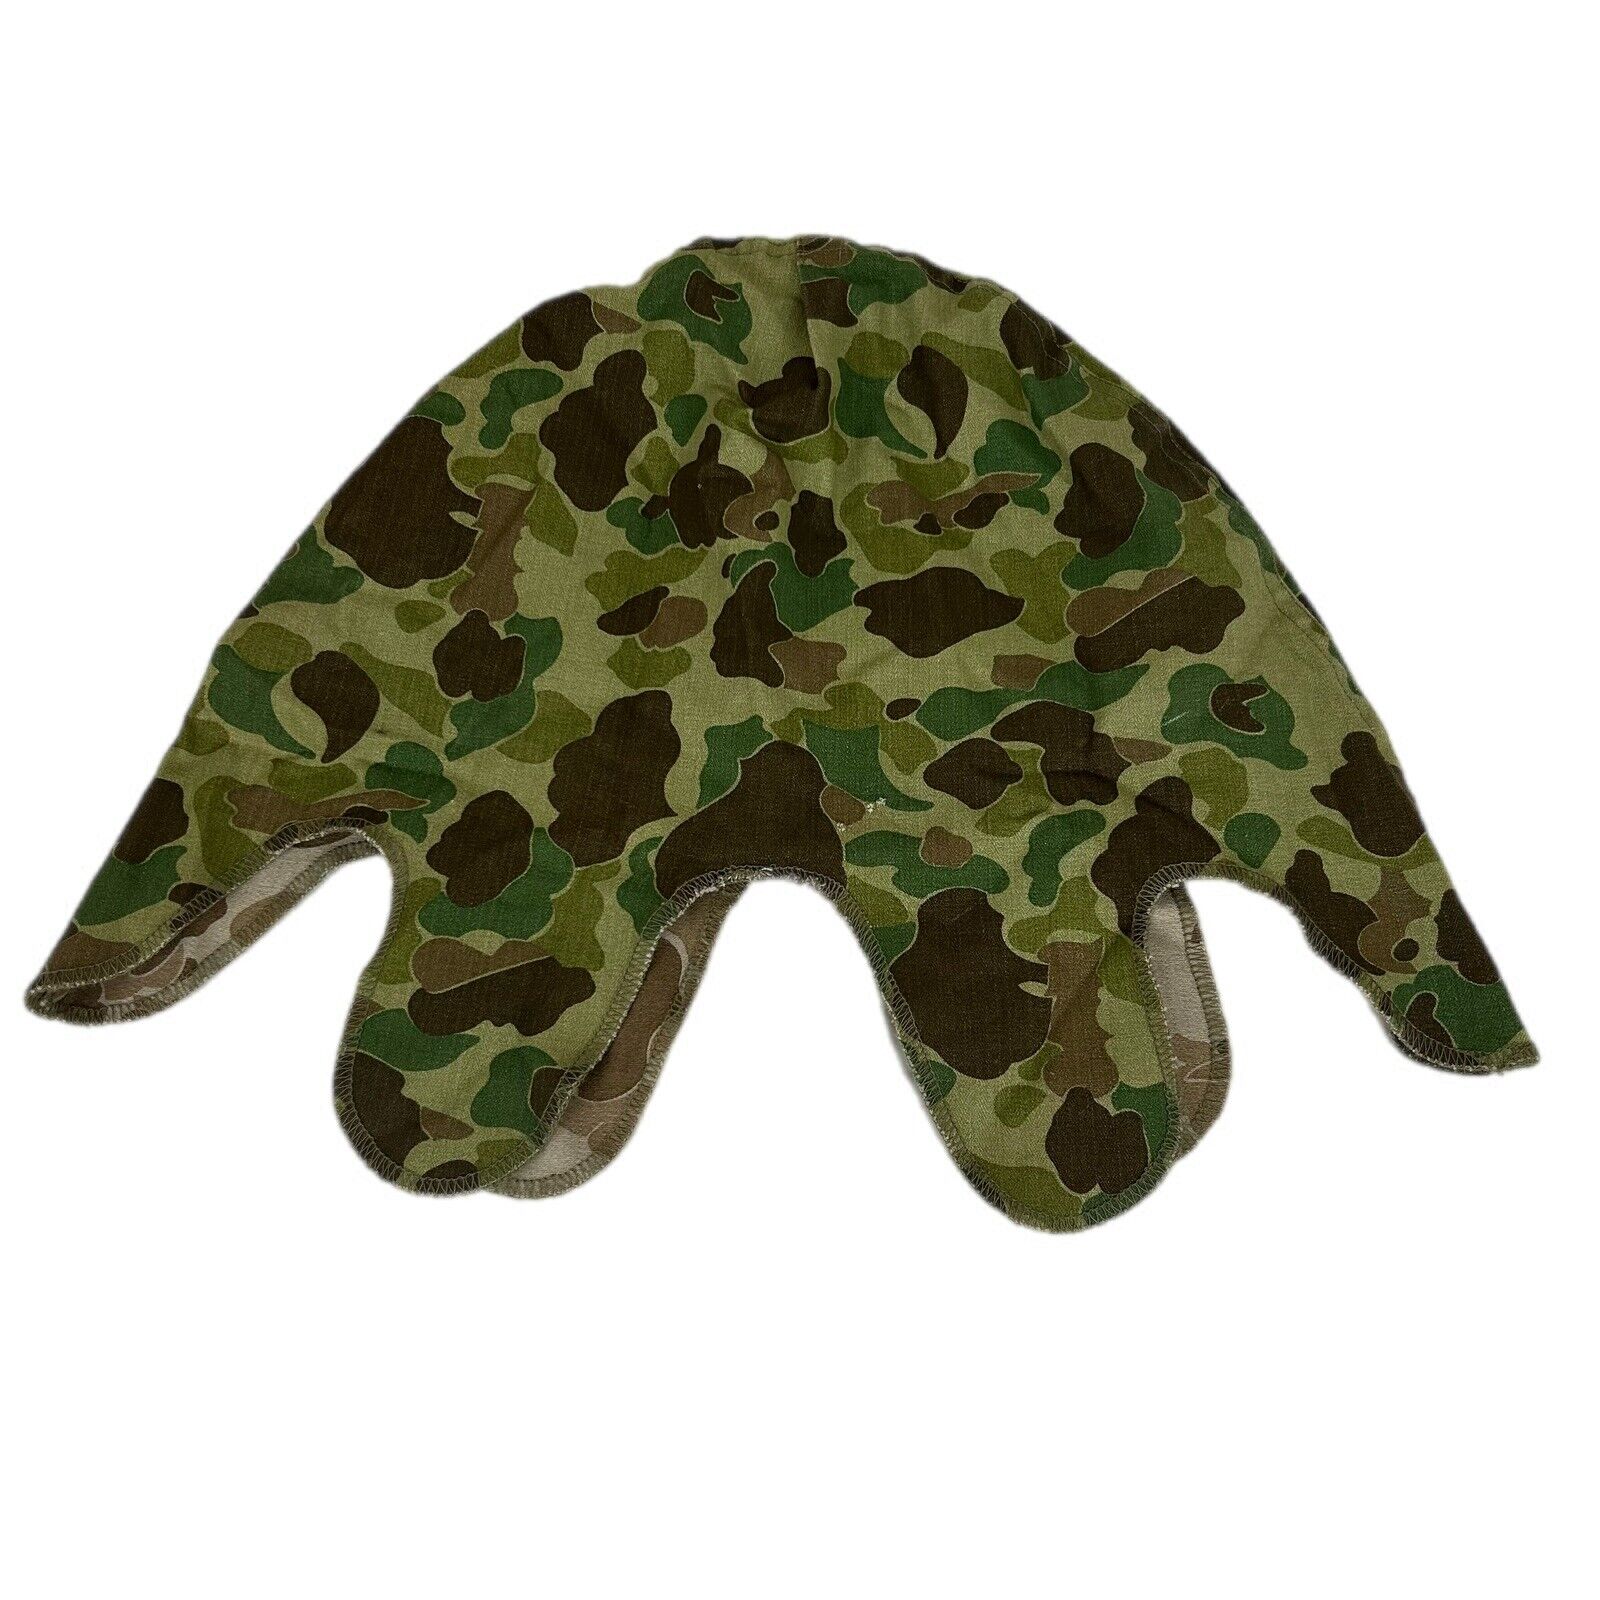 WW2 USMC Marine Corps Frog Skin HBT Helmet Cover